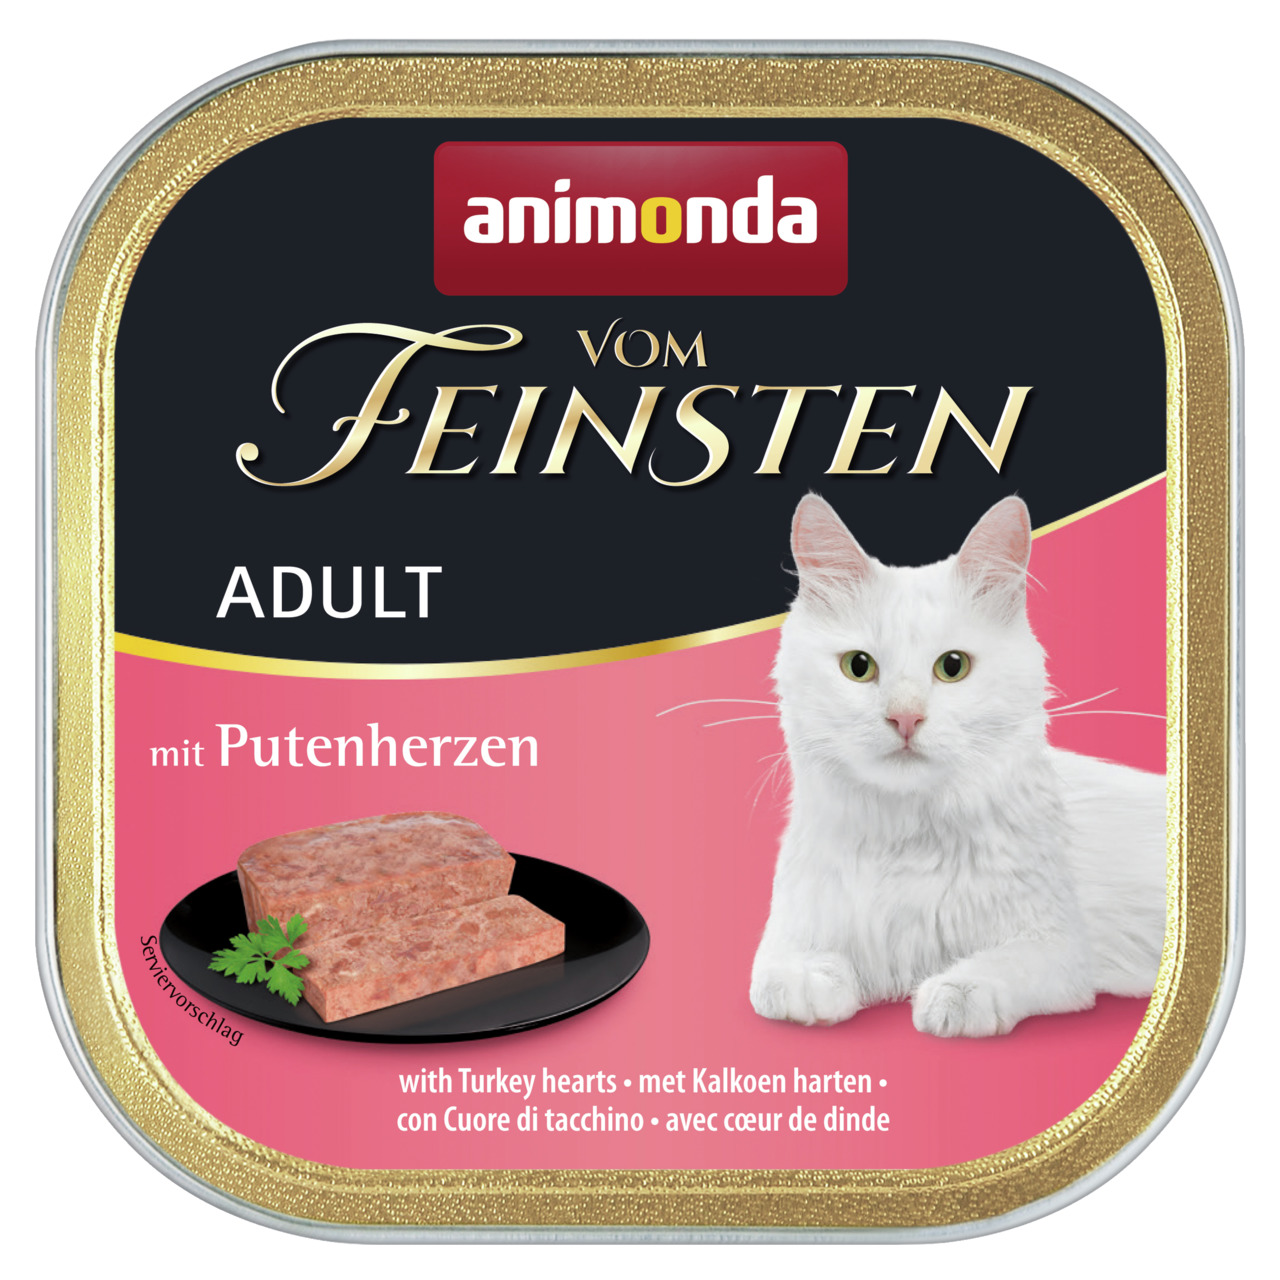 Animonda vom Feinsten Adult Putenherzen Katzen Nassfutter 100 g